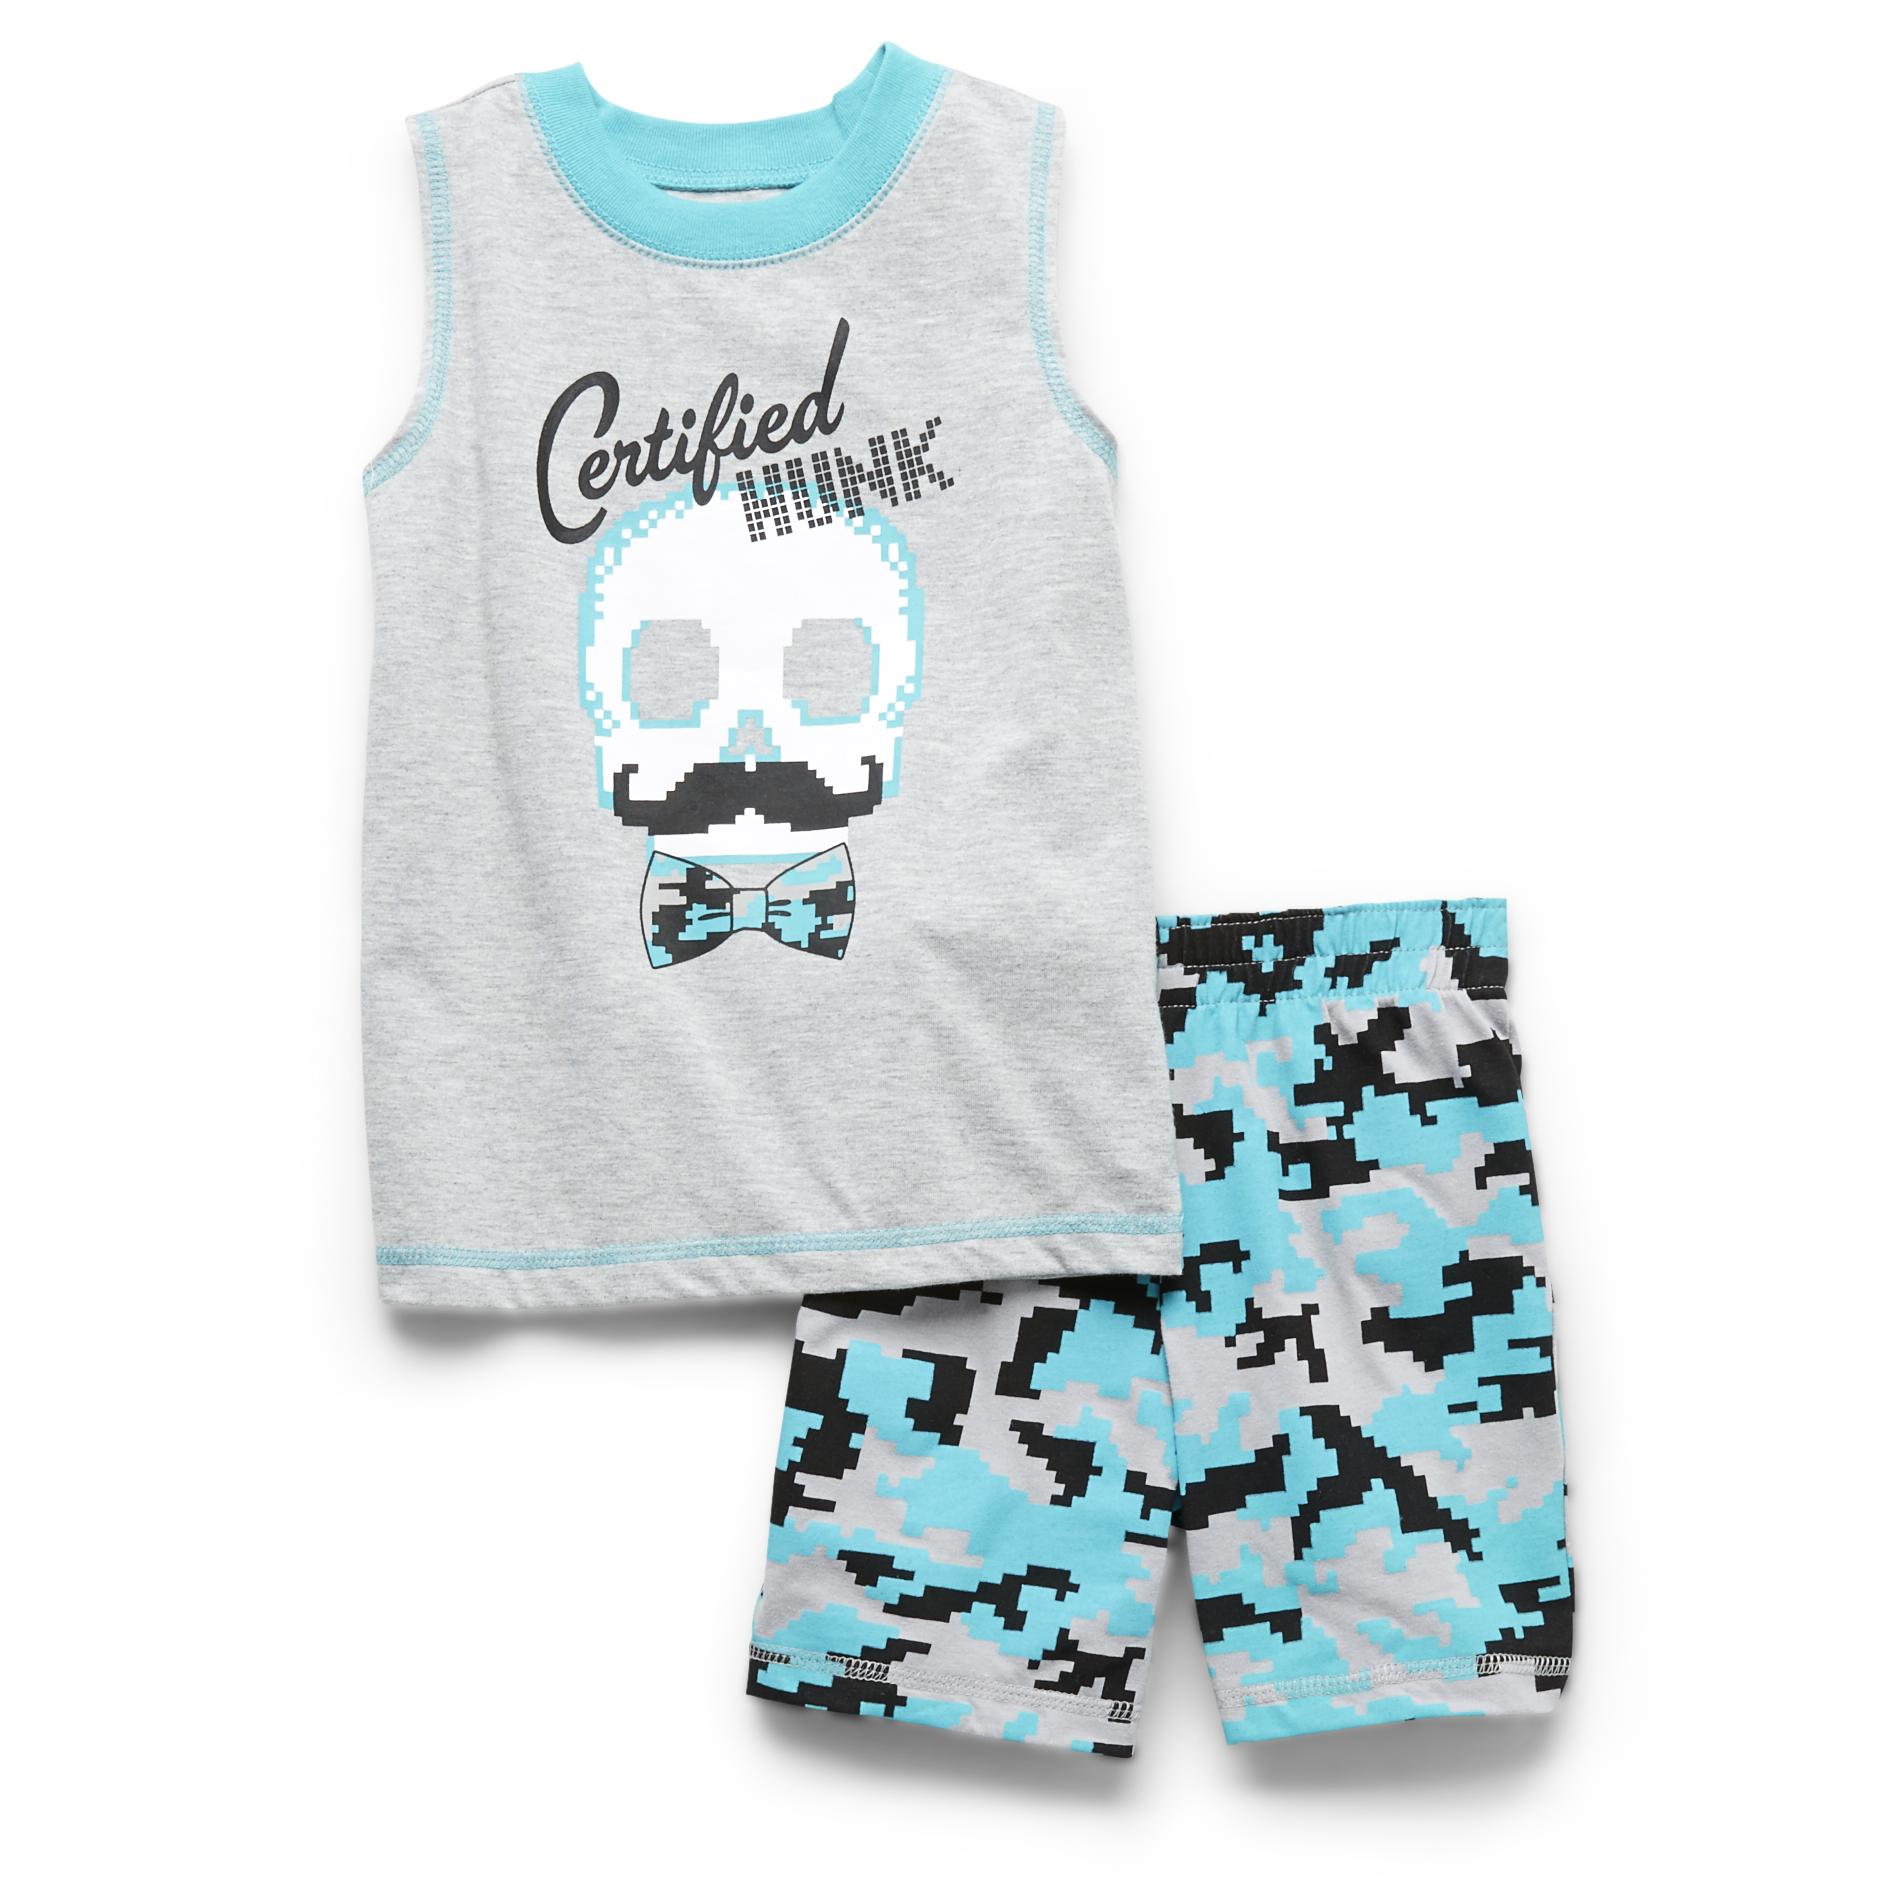 WonderKids Infant & Toddler Boy's Muscle Shirt & Shorts - Certified Hunk